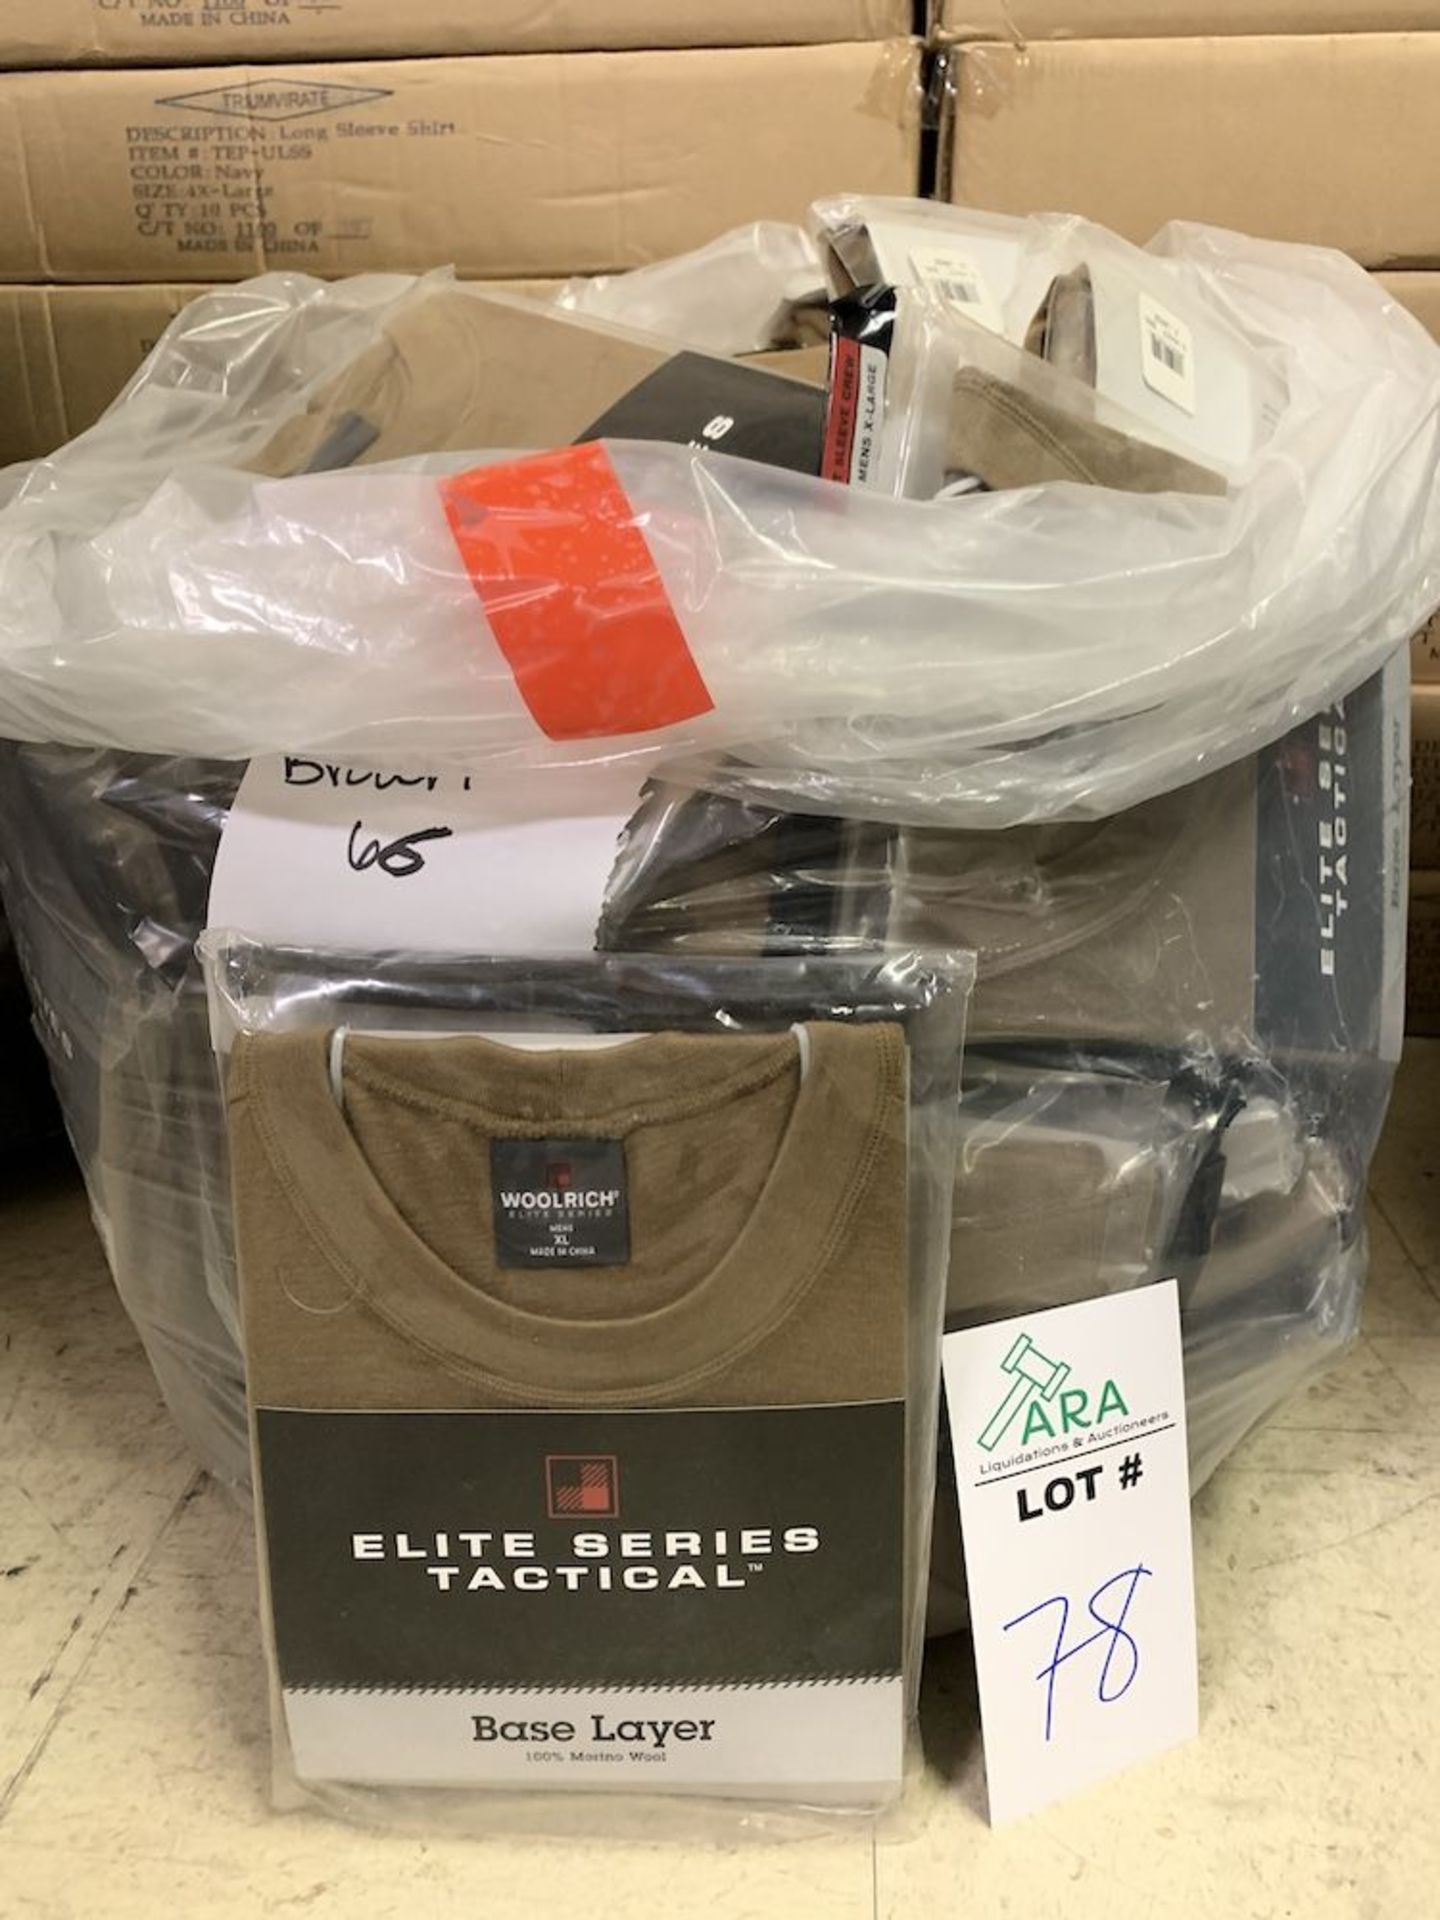 66 Elite Series Tactical Base Layer Short Sleeve Shirts, New in Packaging, Brown, Merino Wool, - Image 4 of 4